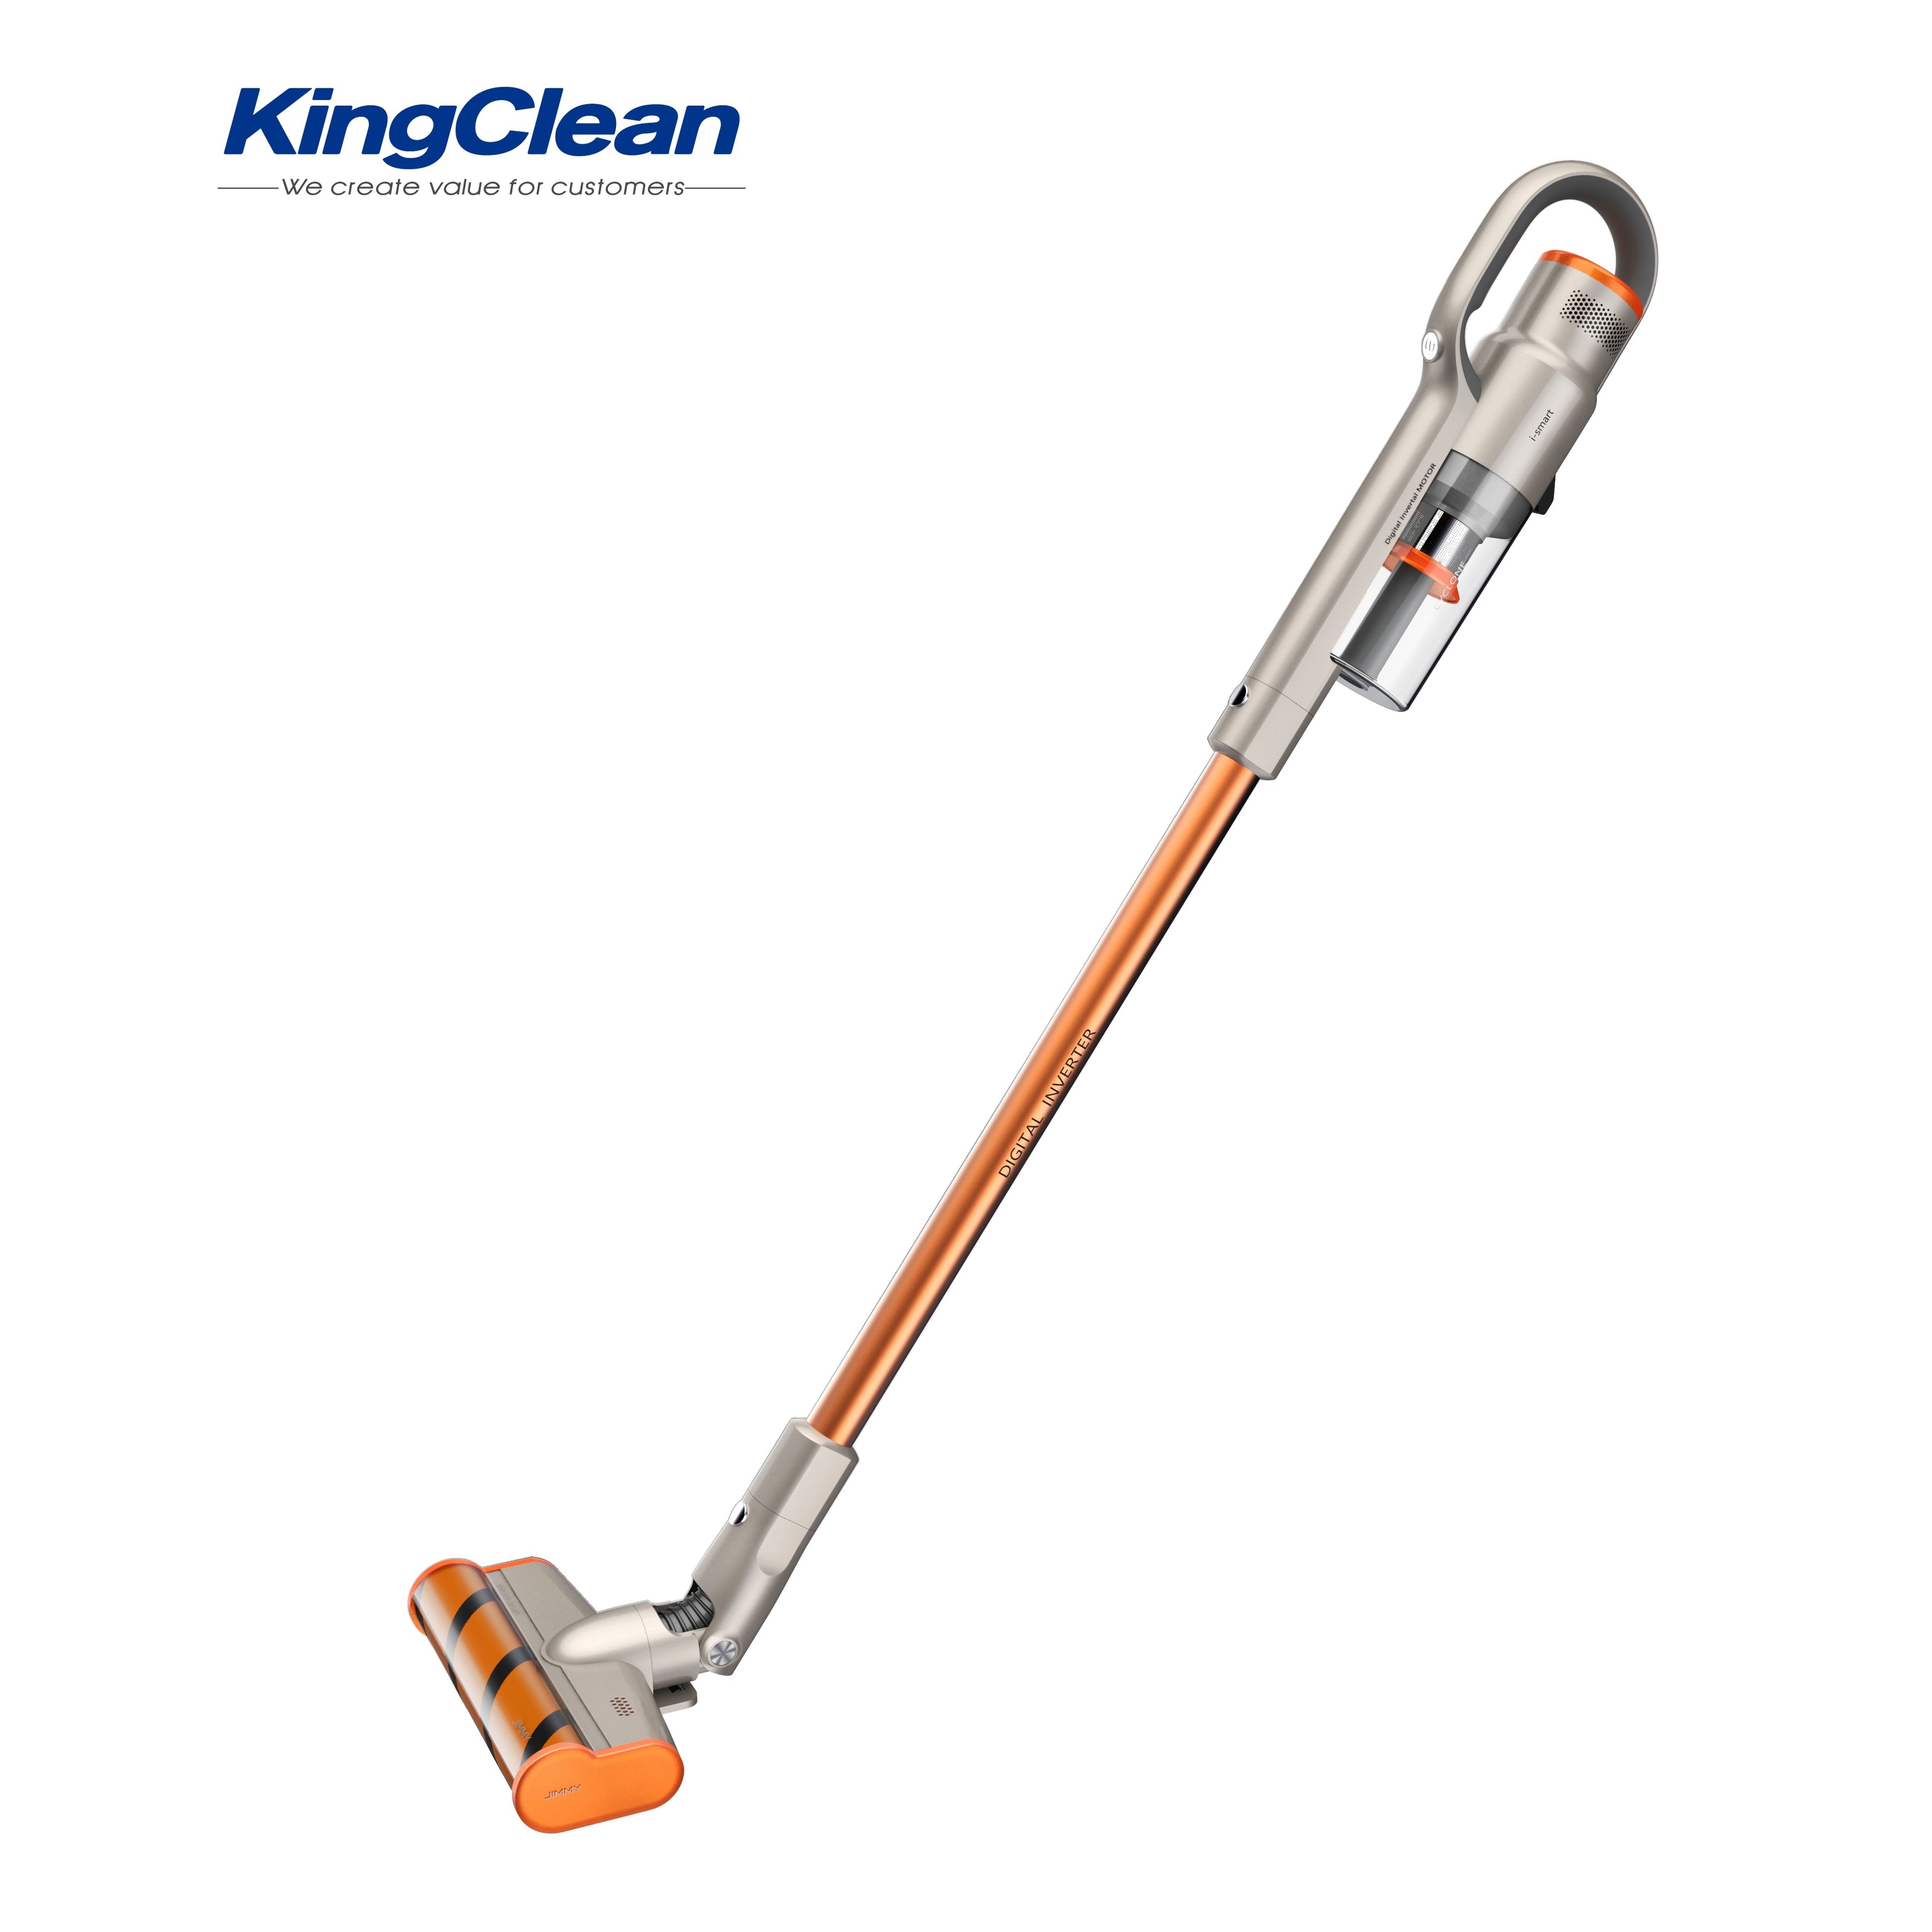 Handheld Multi-function Cordless Stick Vacuum Cleaner